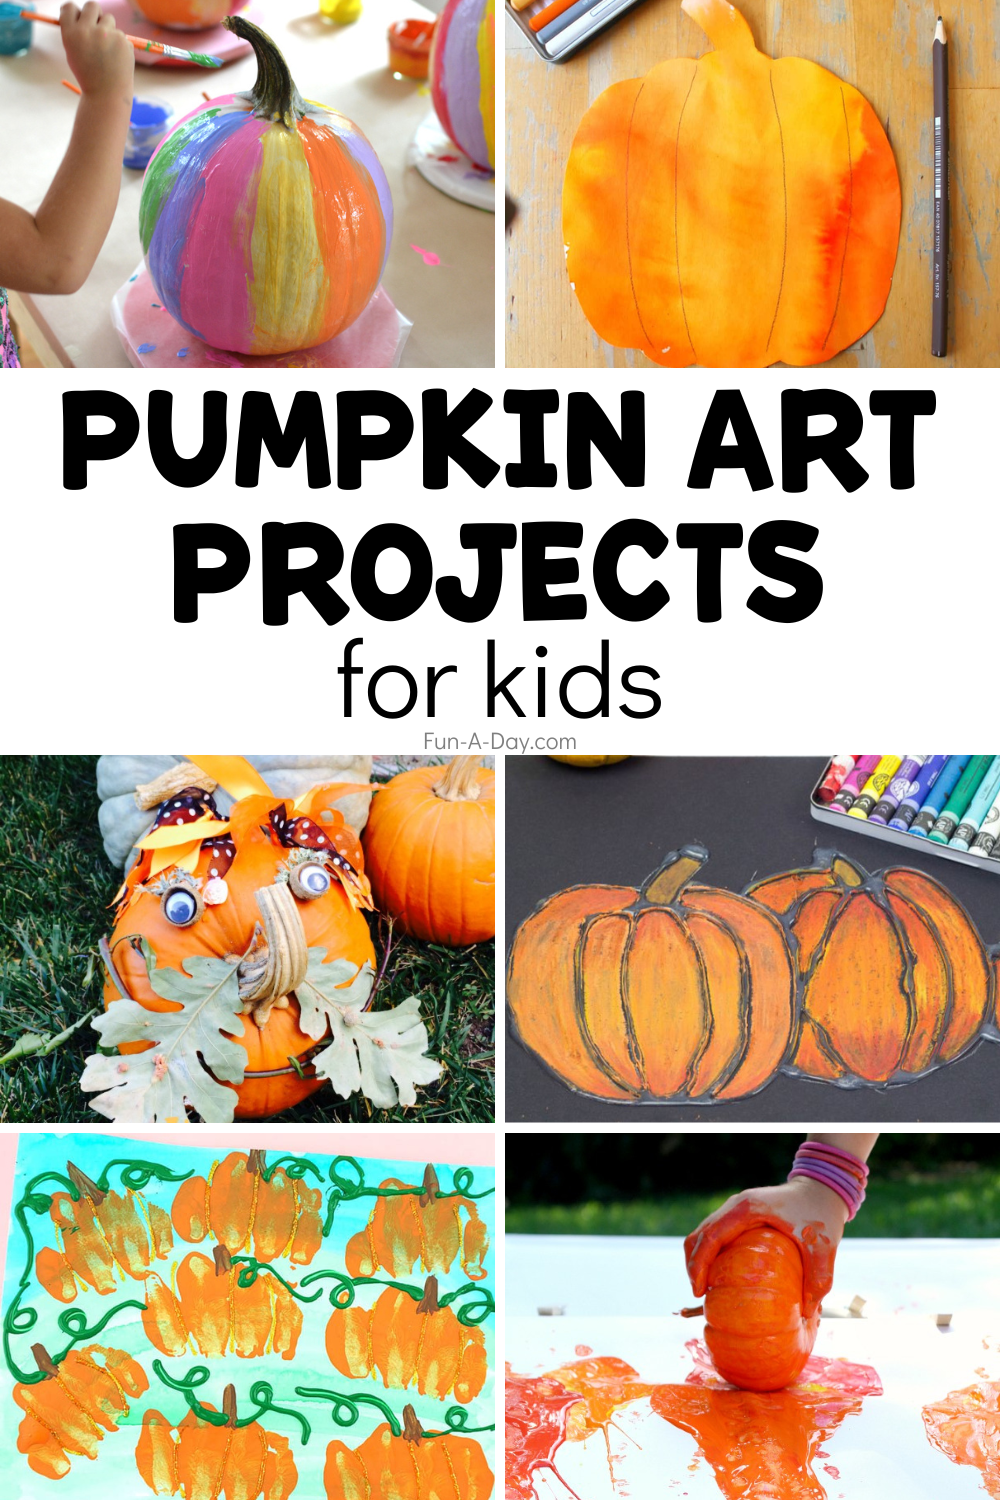 pumpkin ideas with text that reads pumpkin art projects for kids